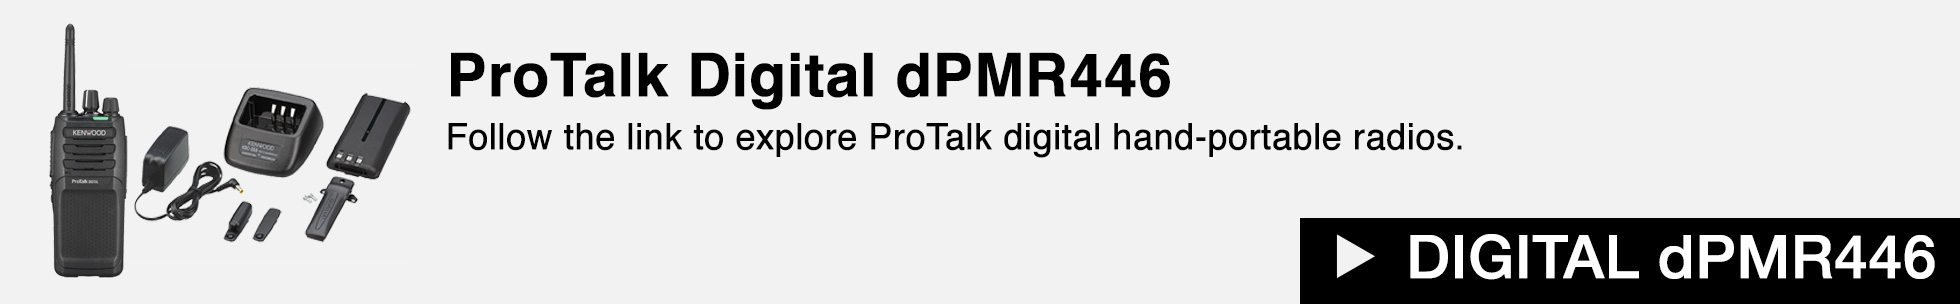 ProTalk Digital dPMR446 products